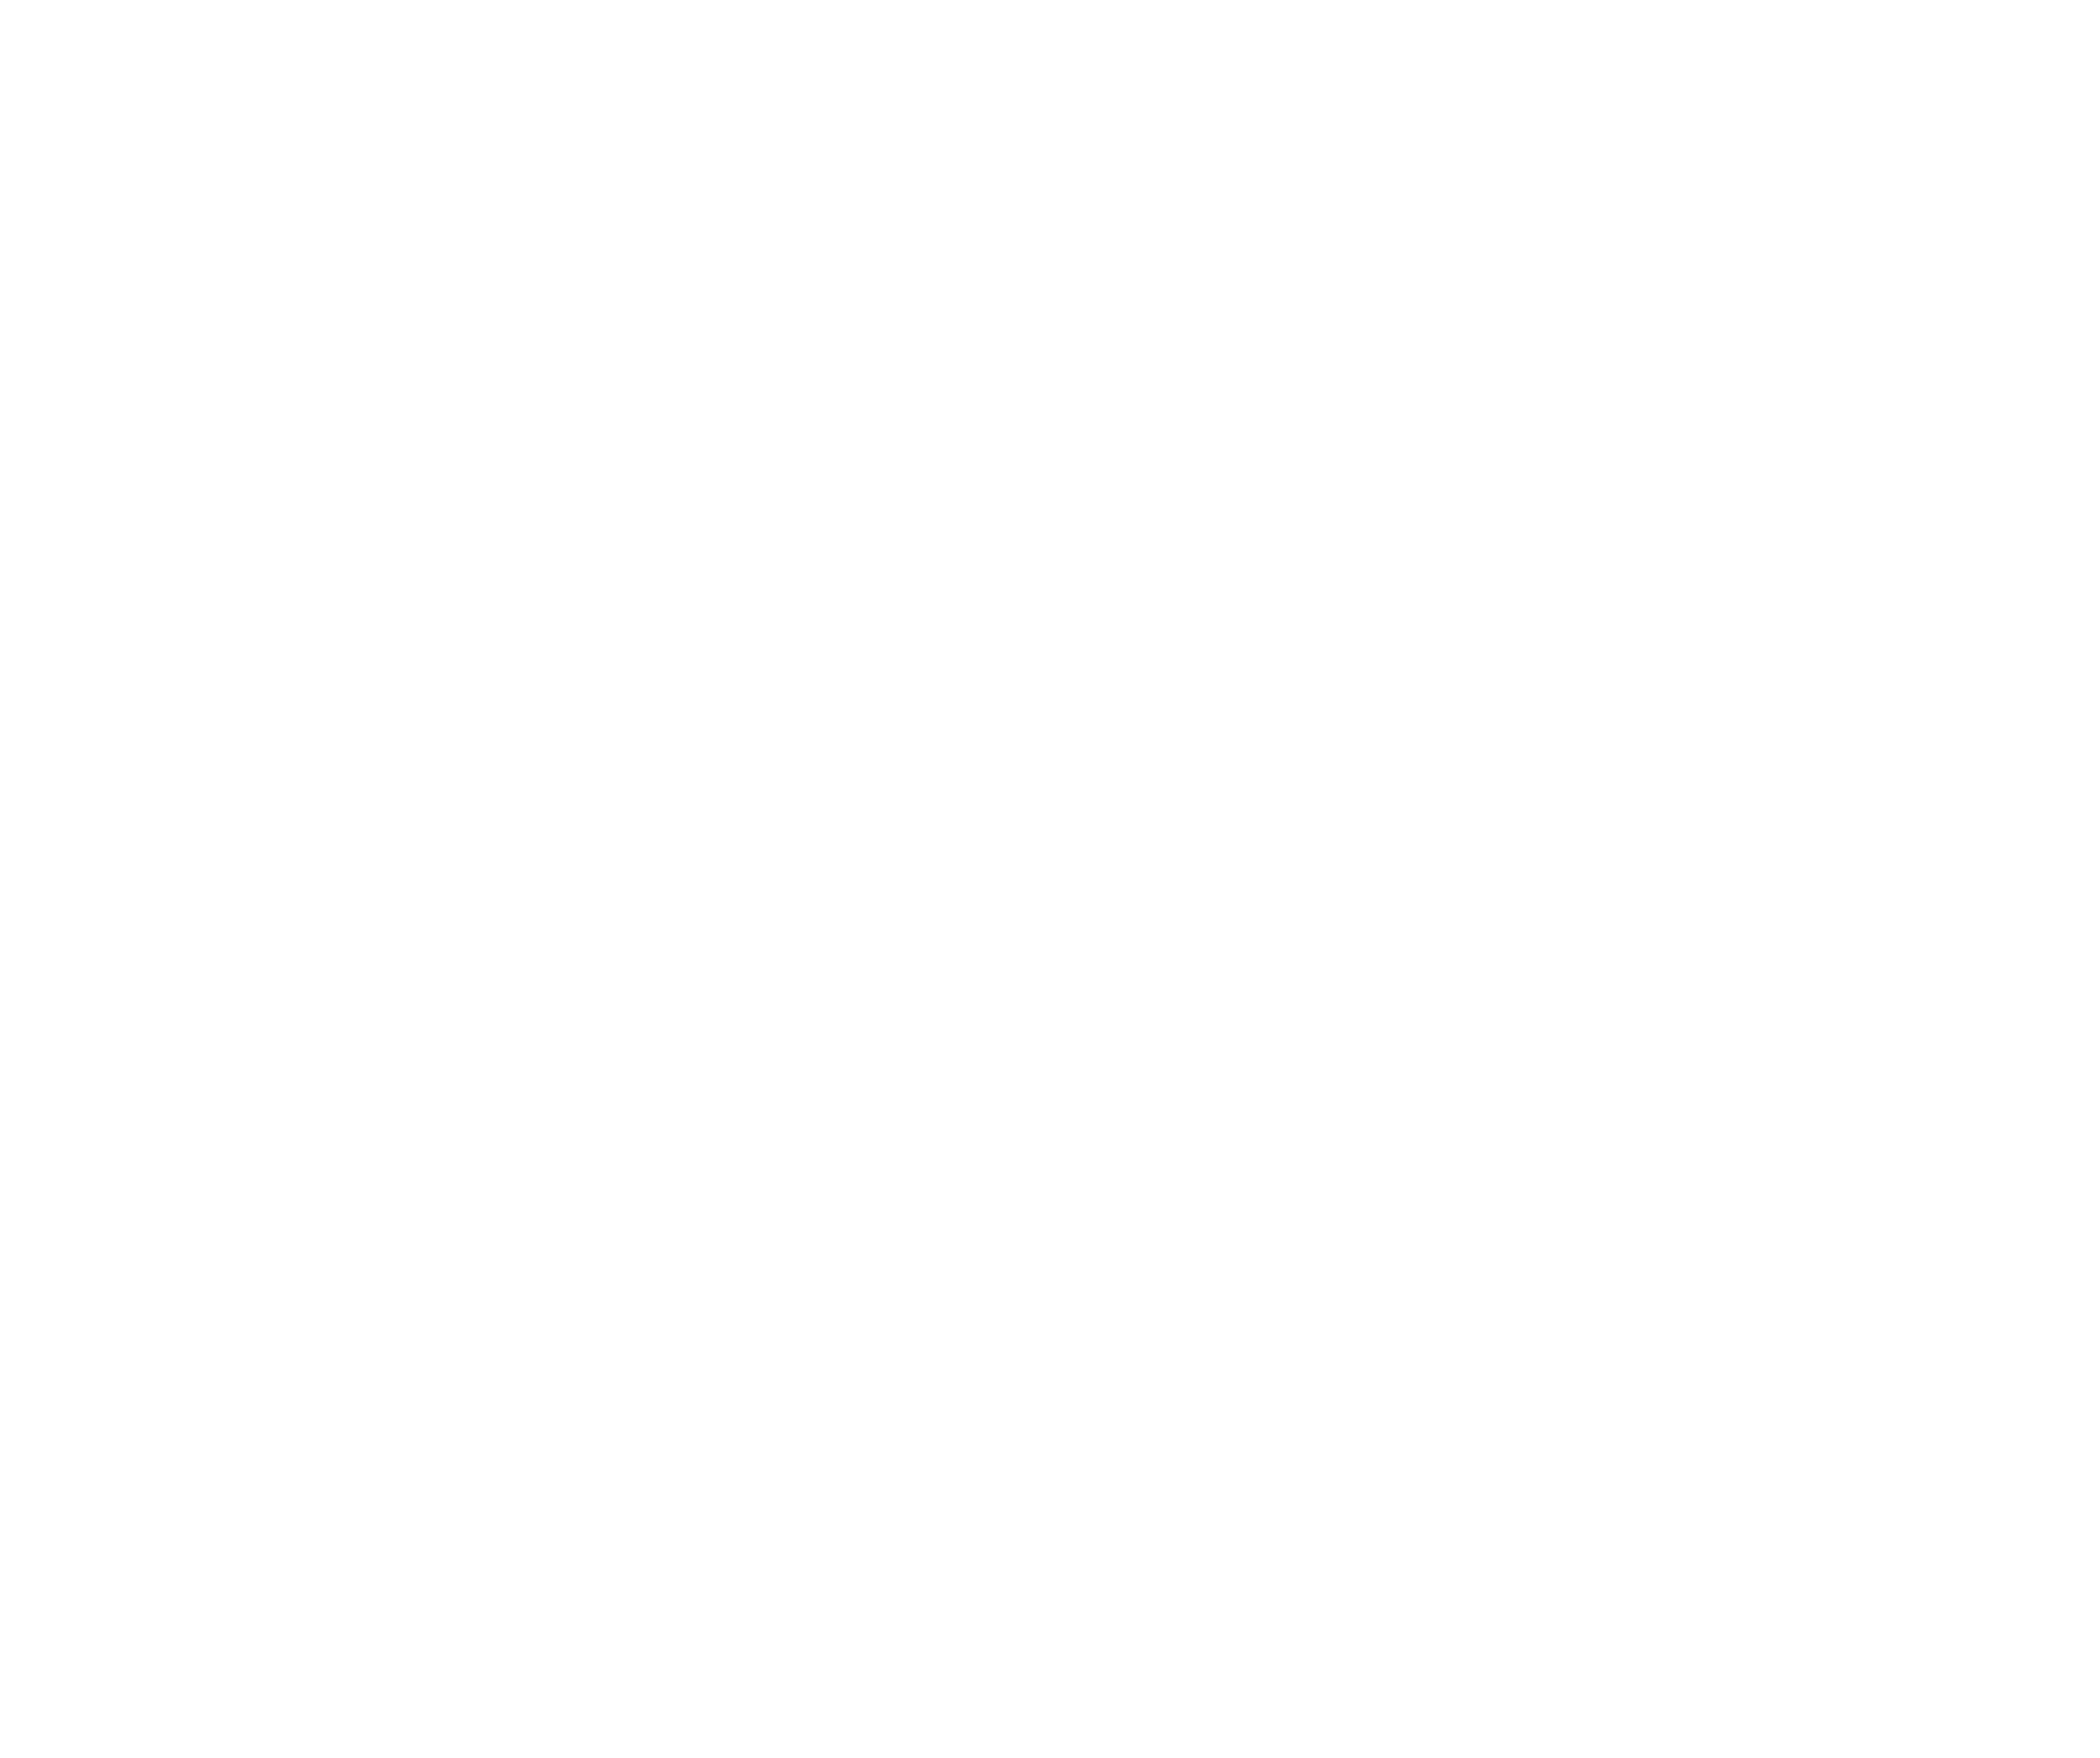 logo_Nissan